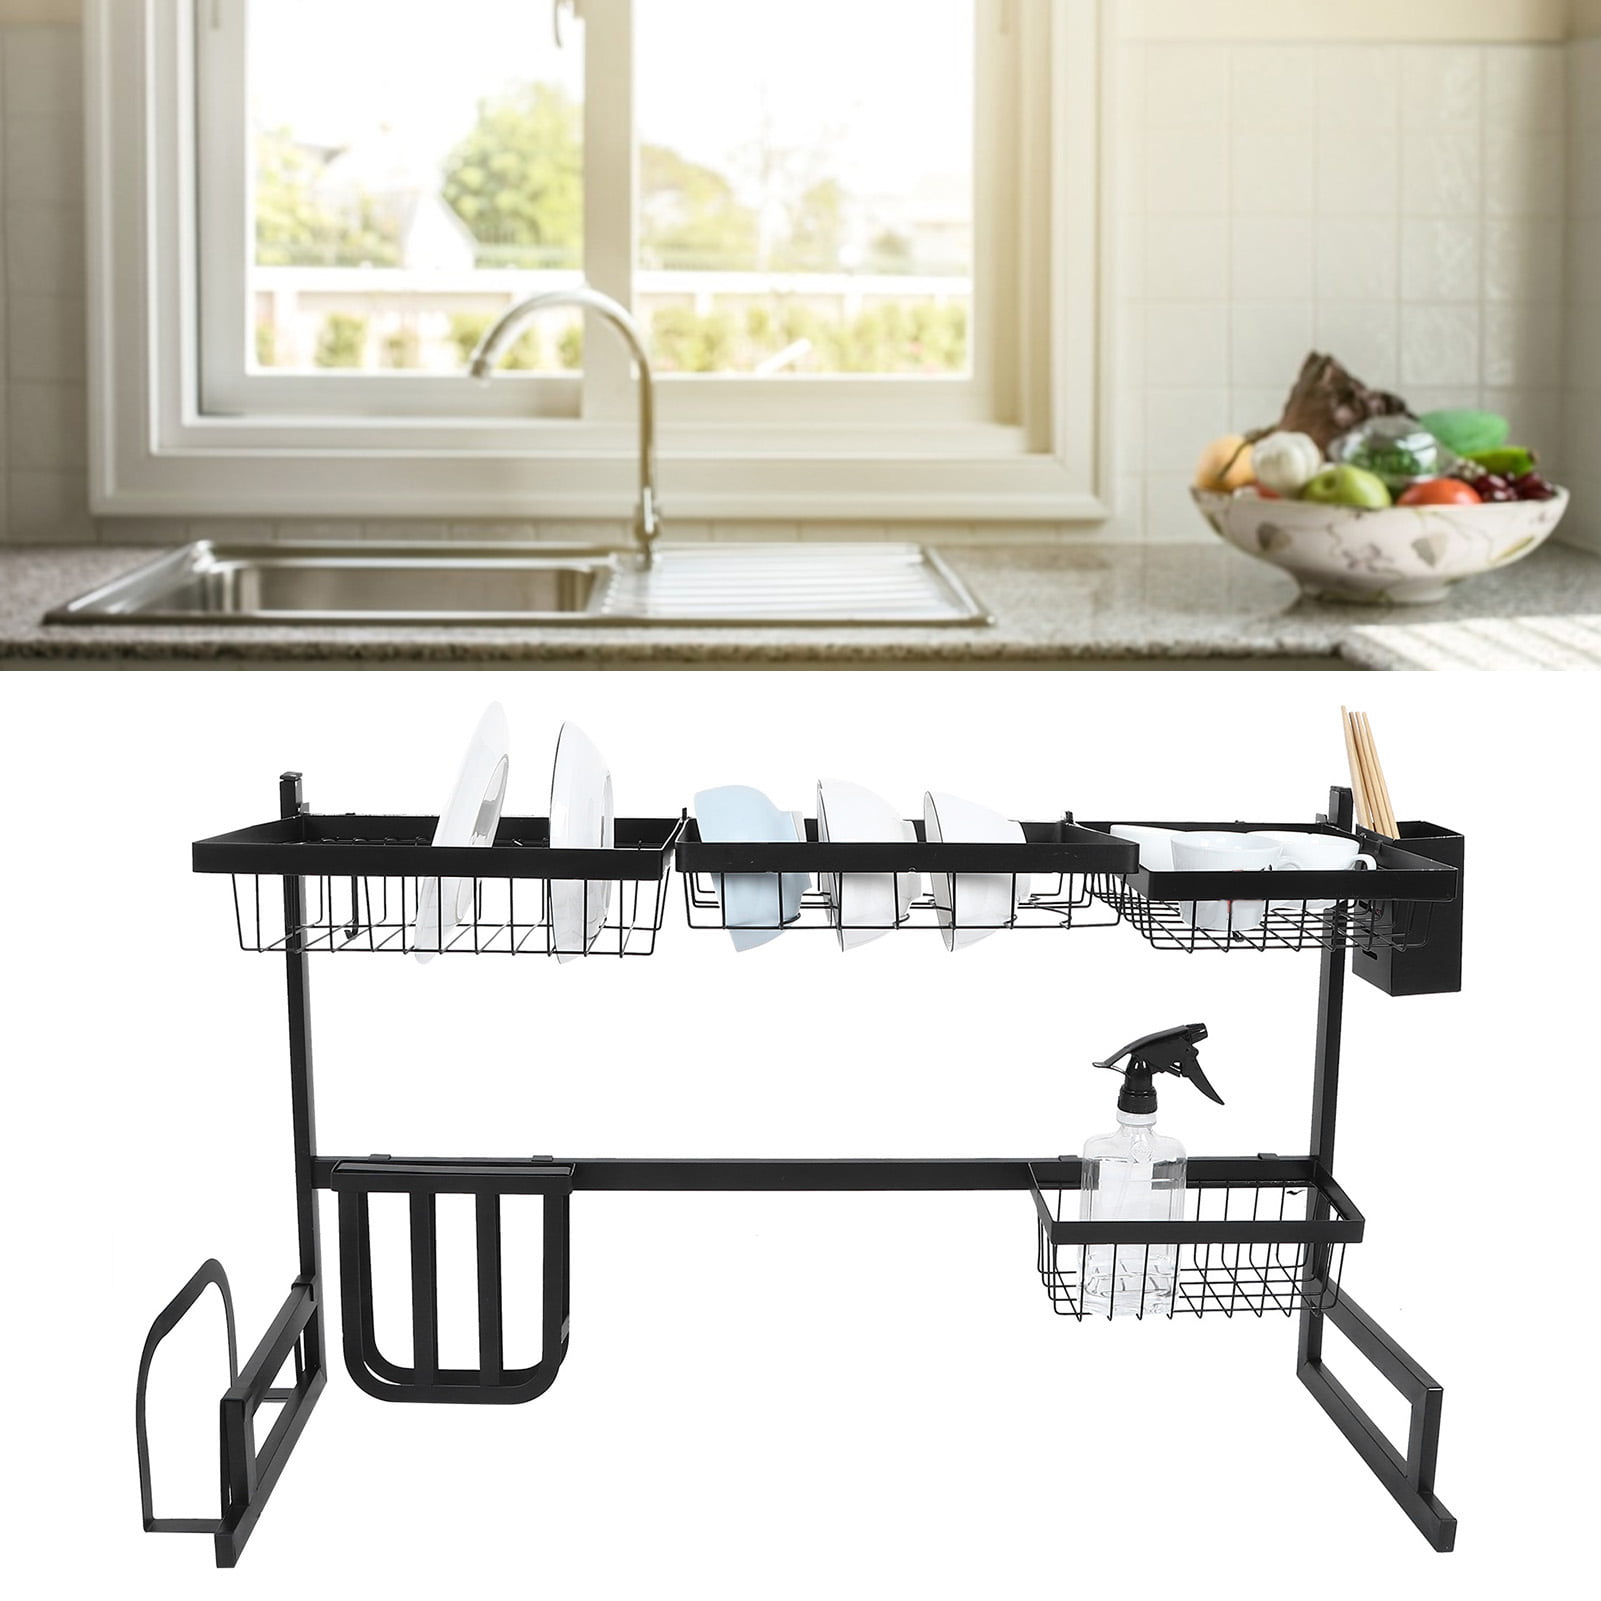 InterDesign Metro Rustproof  Kitchen Sink Protector Grid Silver/Gr... Aluminum 